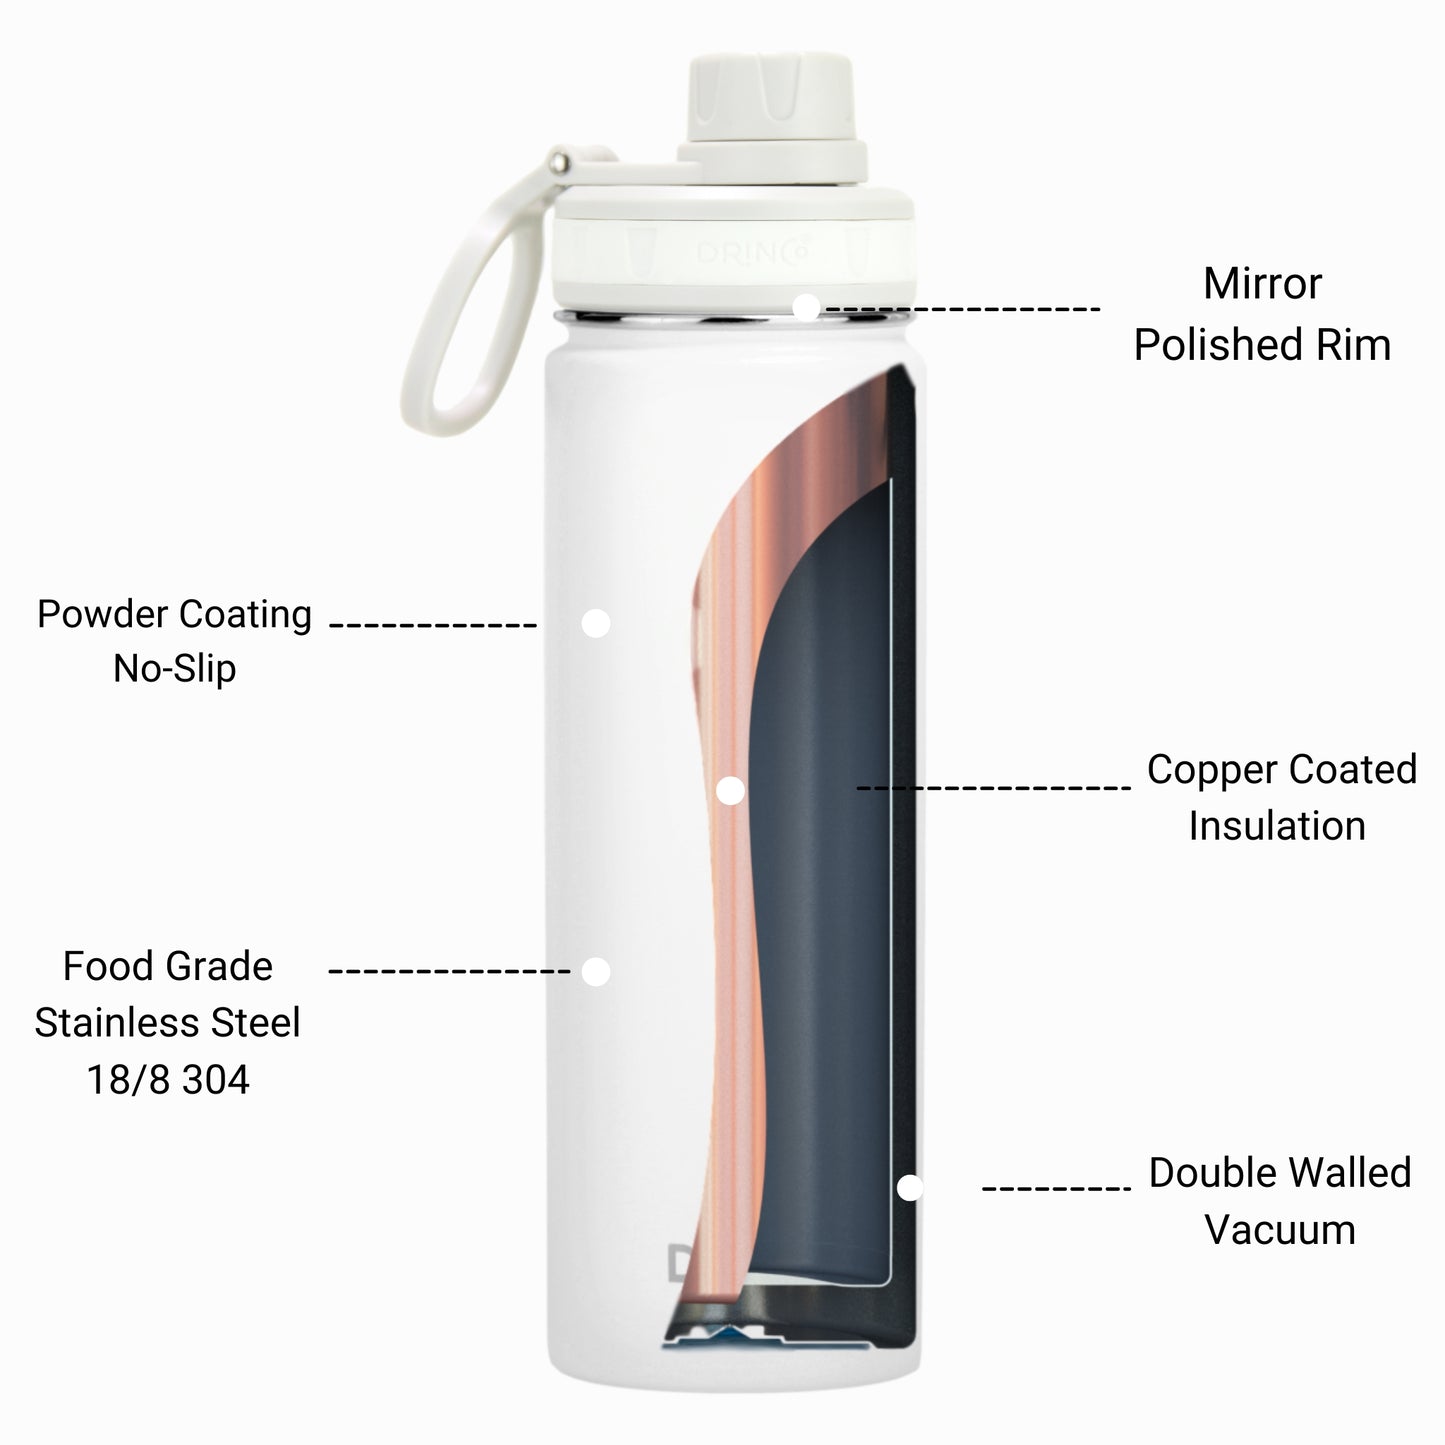 DRINCO® 22oz Stainless Steel Sport Water Bottle - Artic White